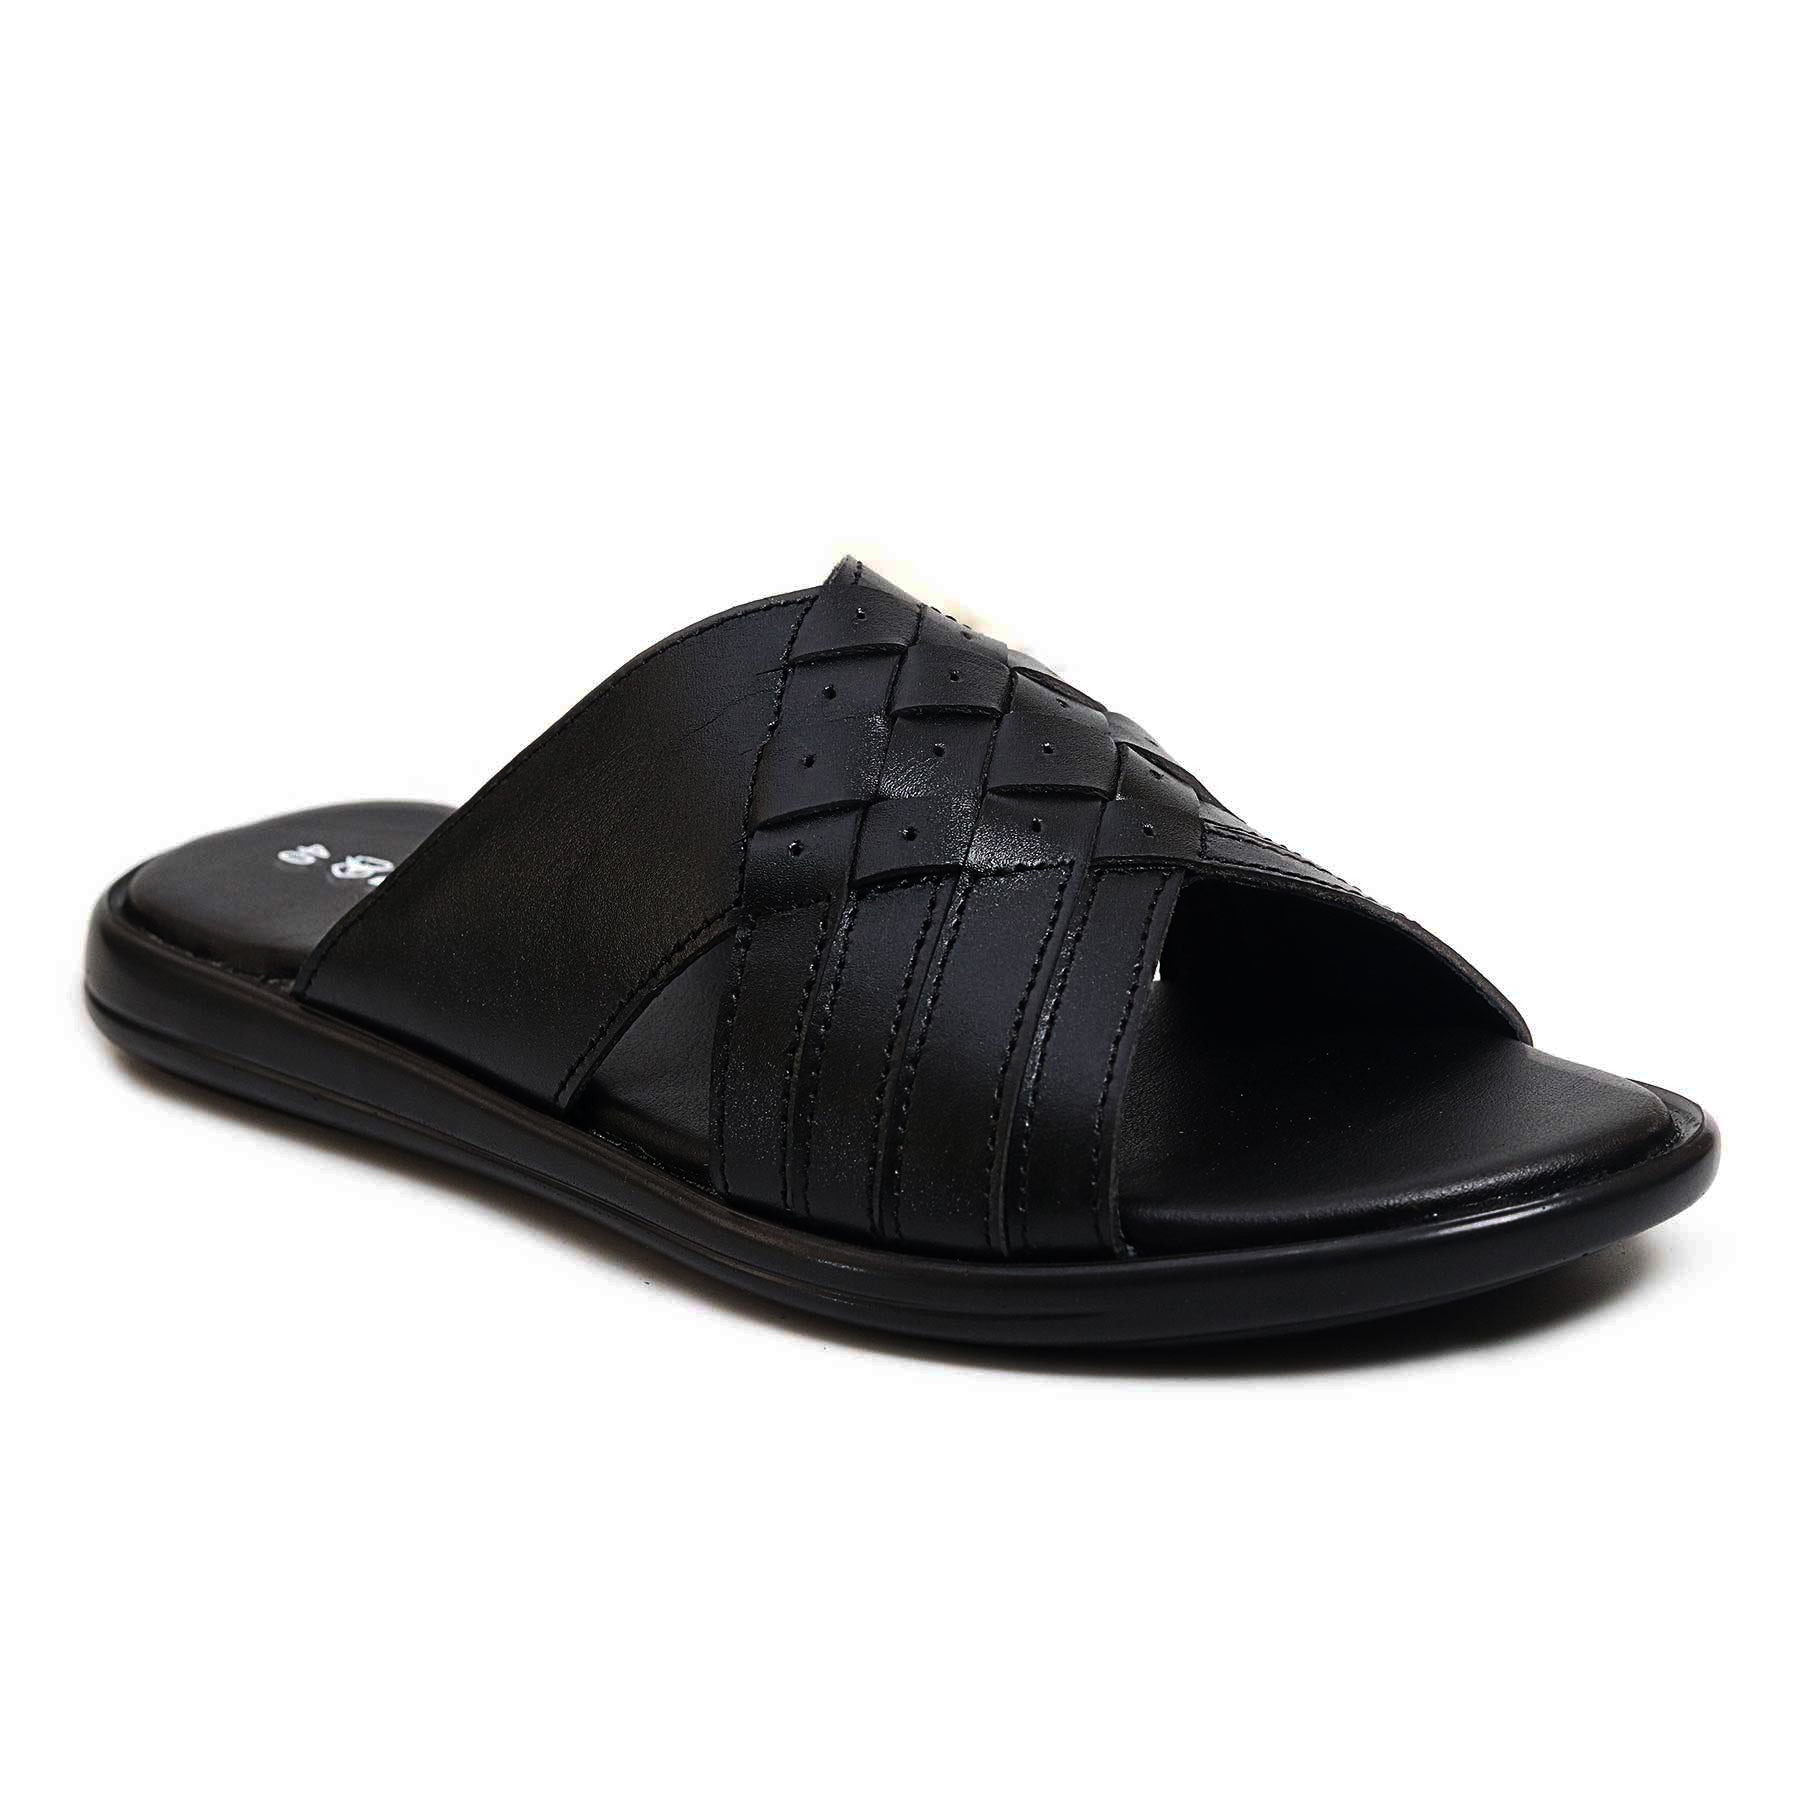 Zays Leather Sandal For Men (Black) - ZA06